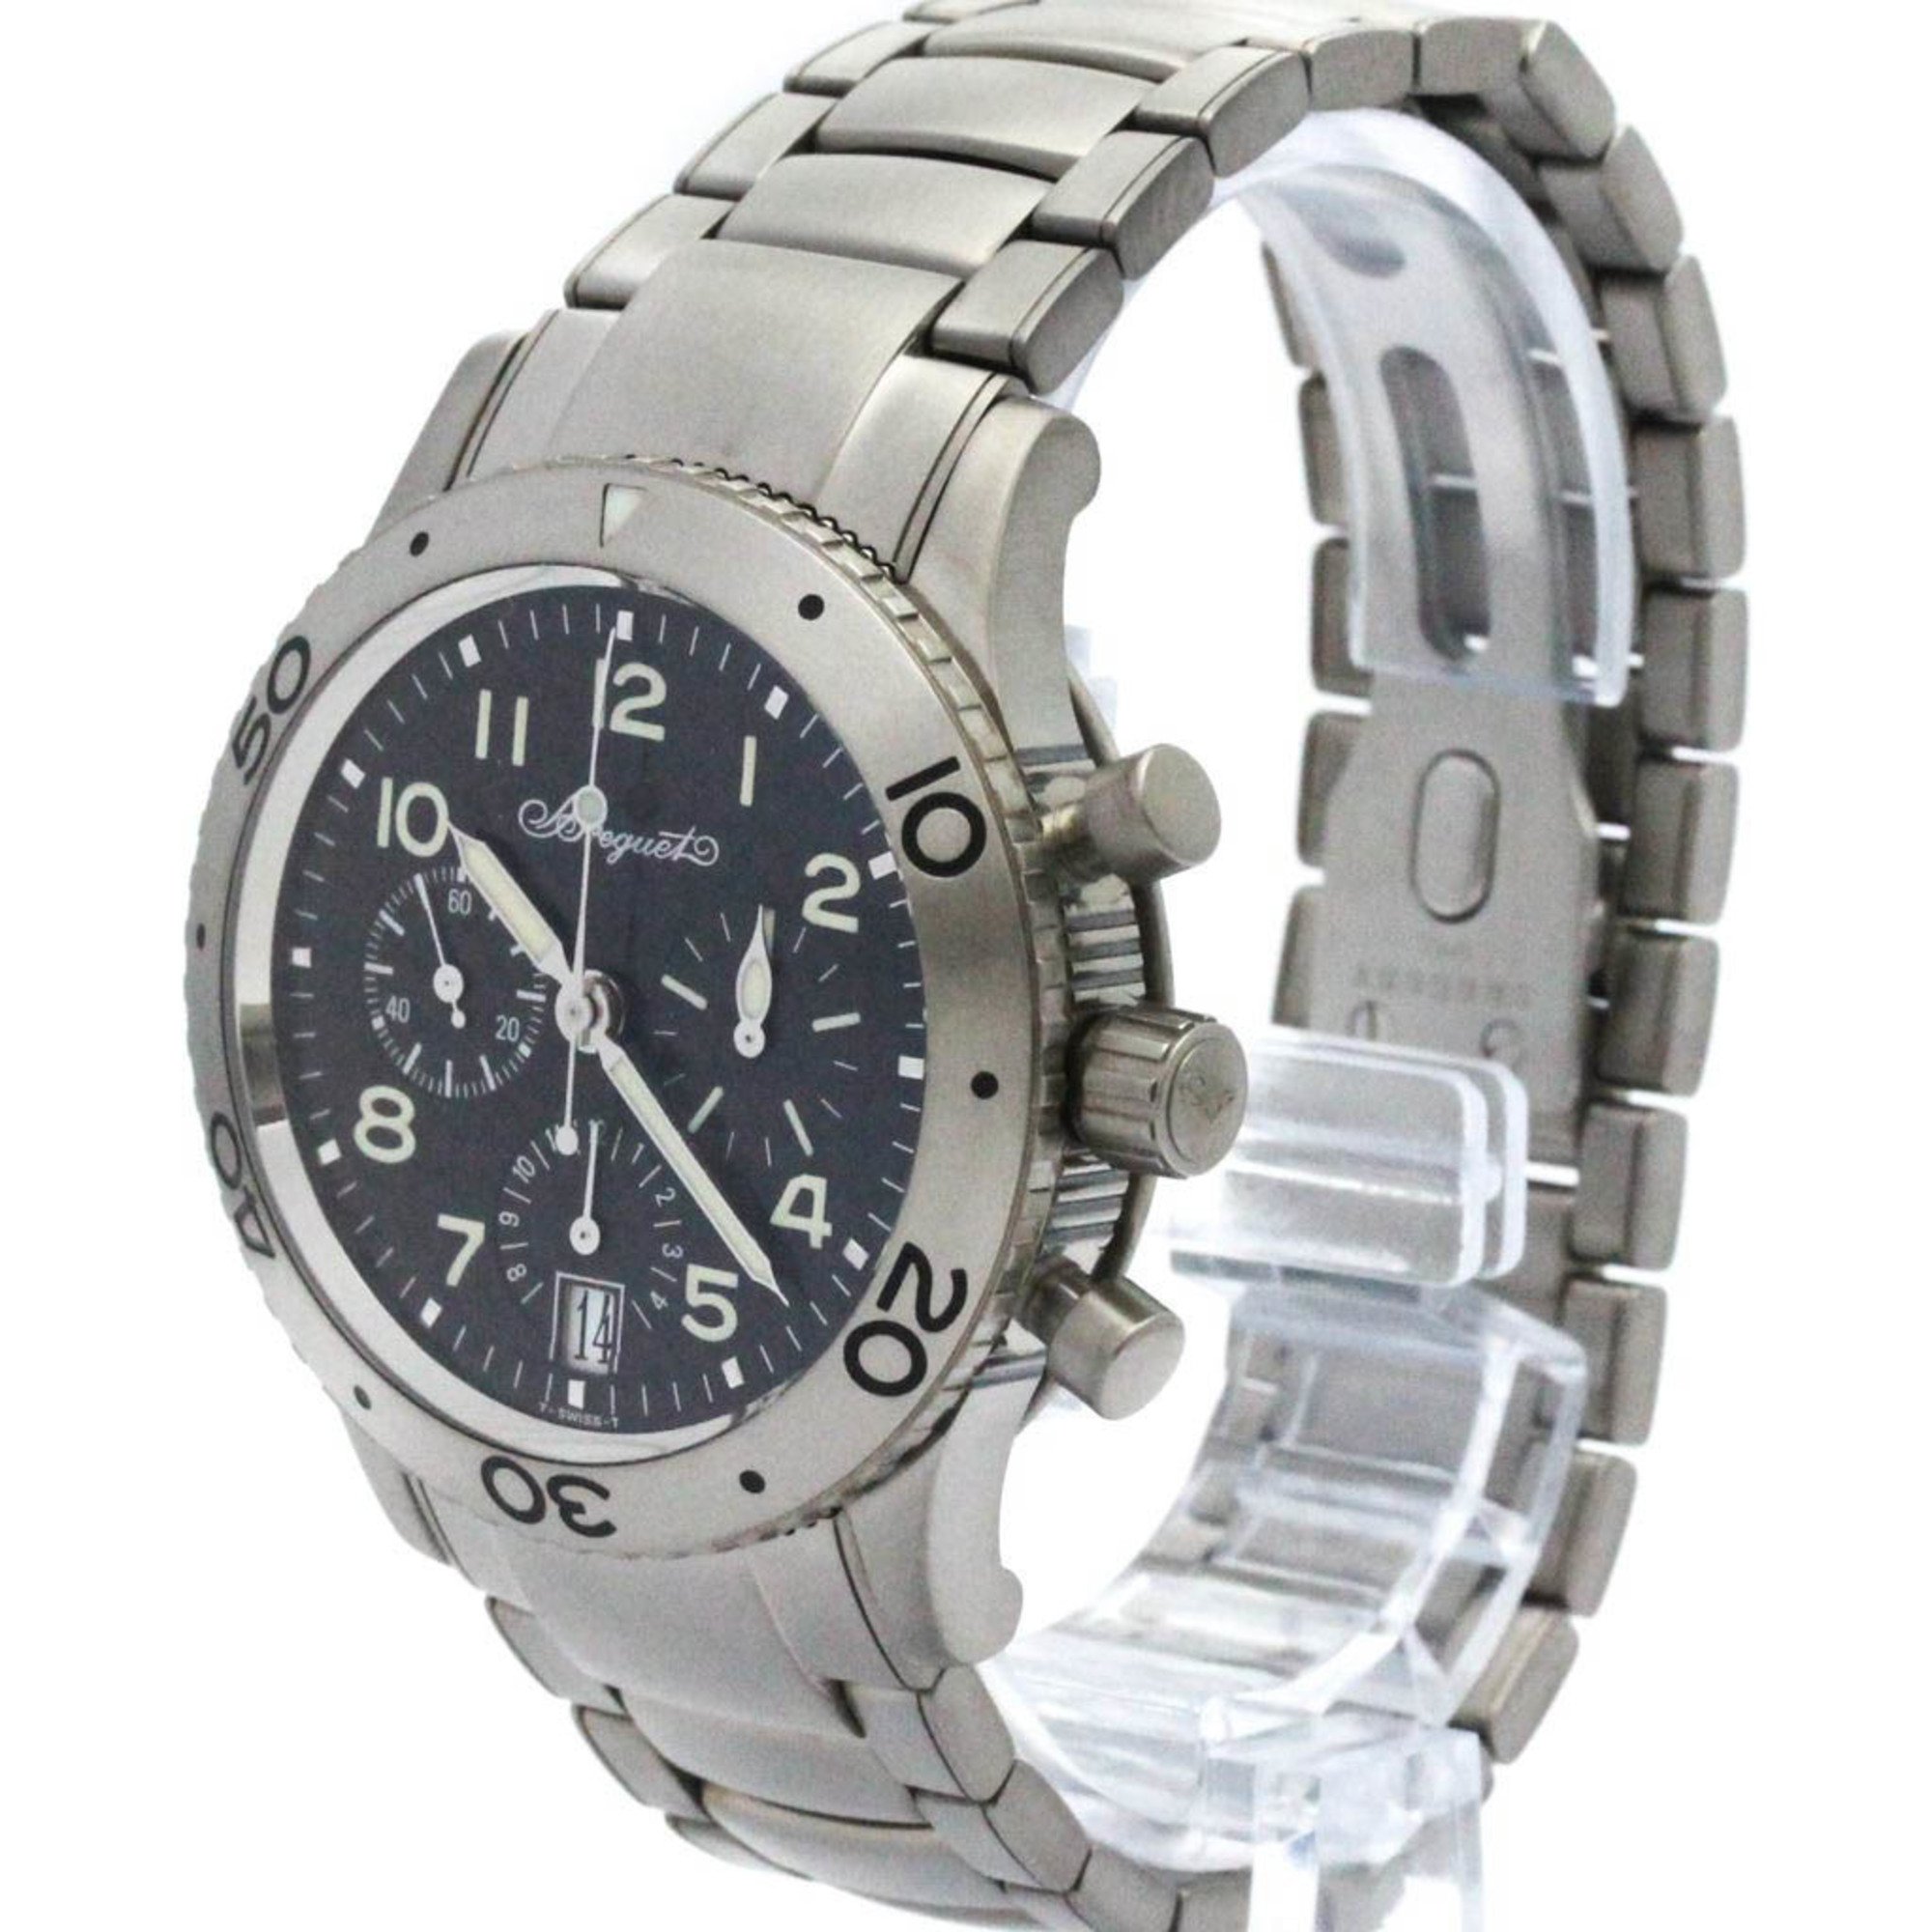 Polished BREGUET Transatlantique Type XX Titanium Automatic Watch 3820TI BF571608